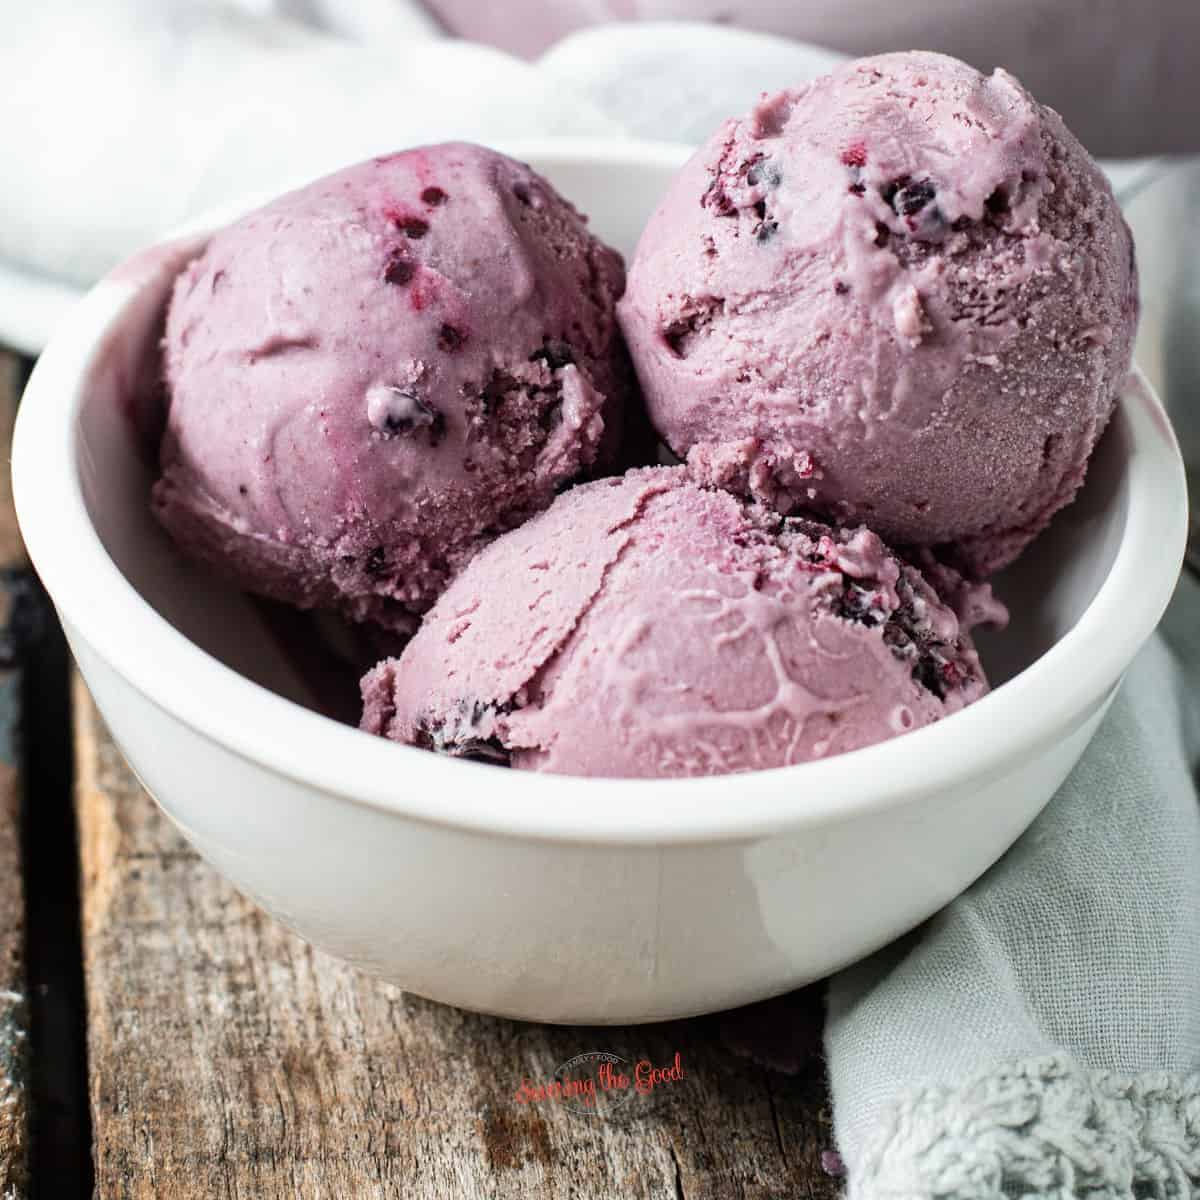 black-raspberry-ice-cream-3-scoops-in-a-white-bowl-square-image-.jpg